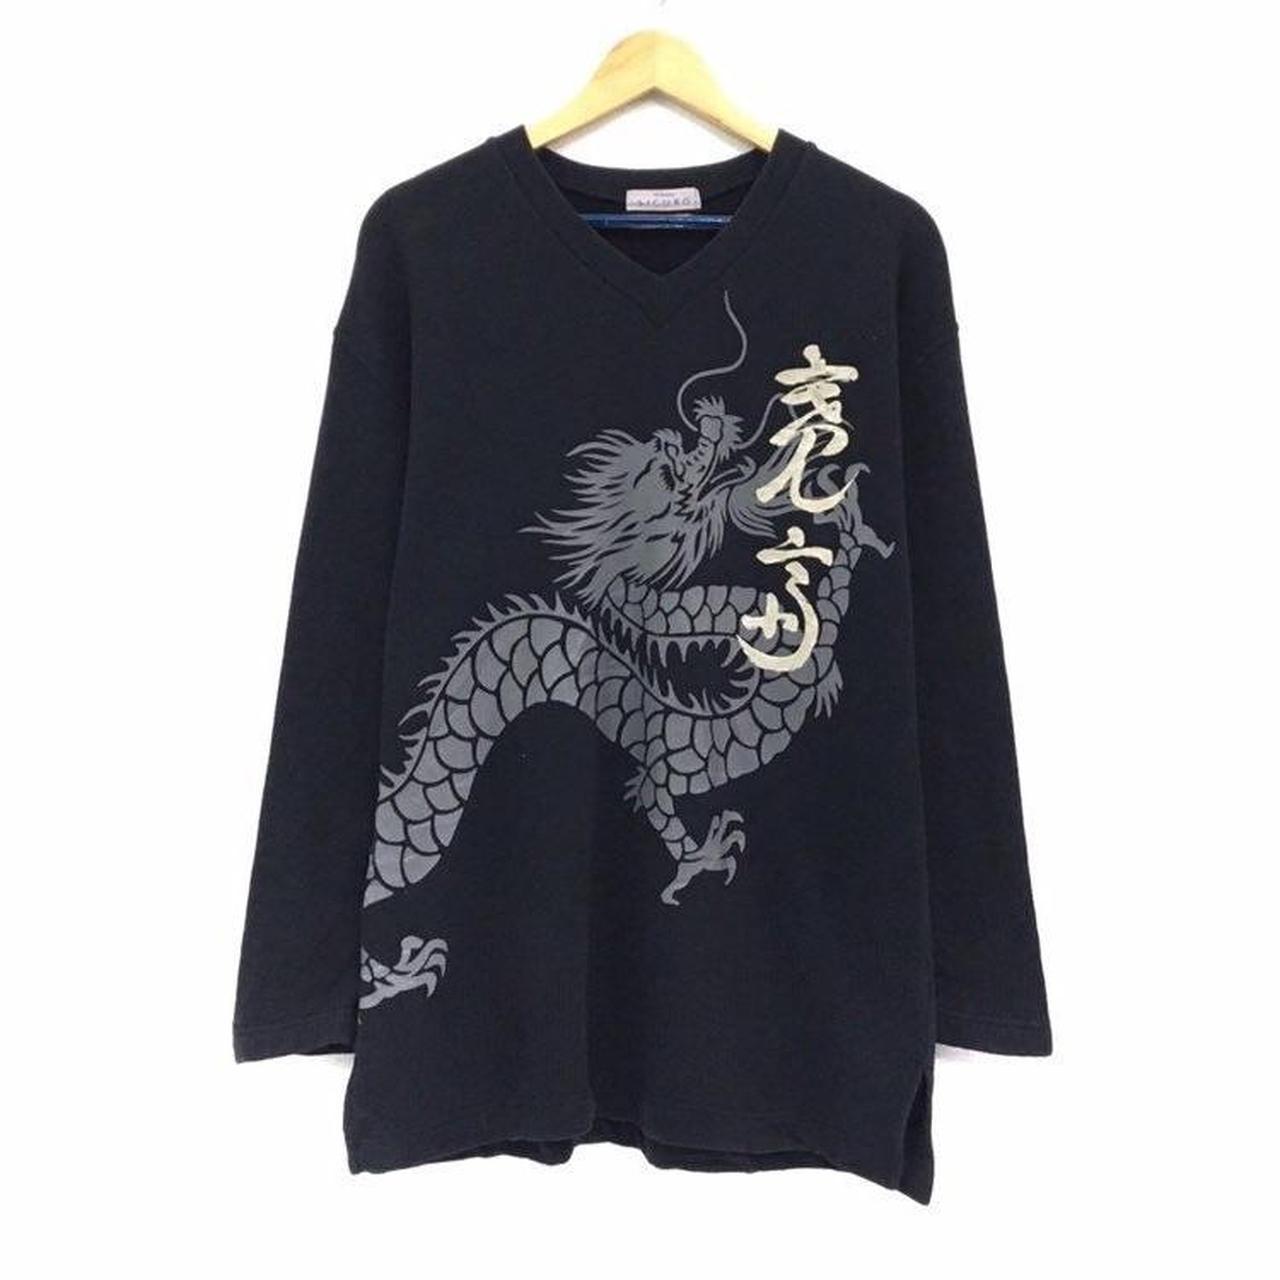 Kansai Yamamoto Men's Black Sweatshirt